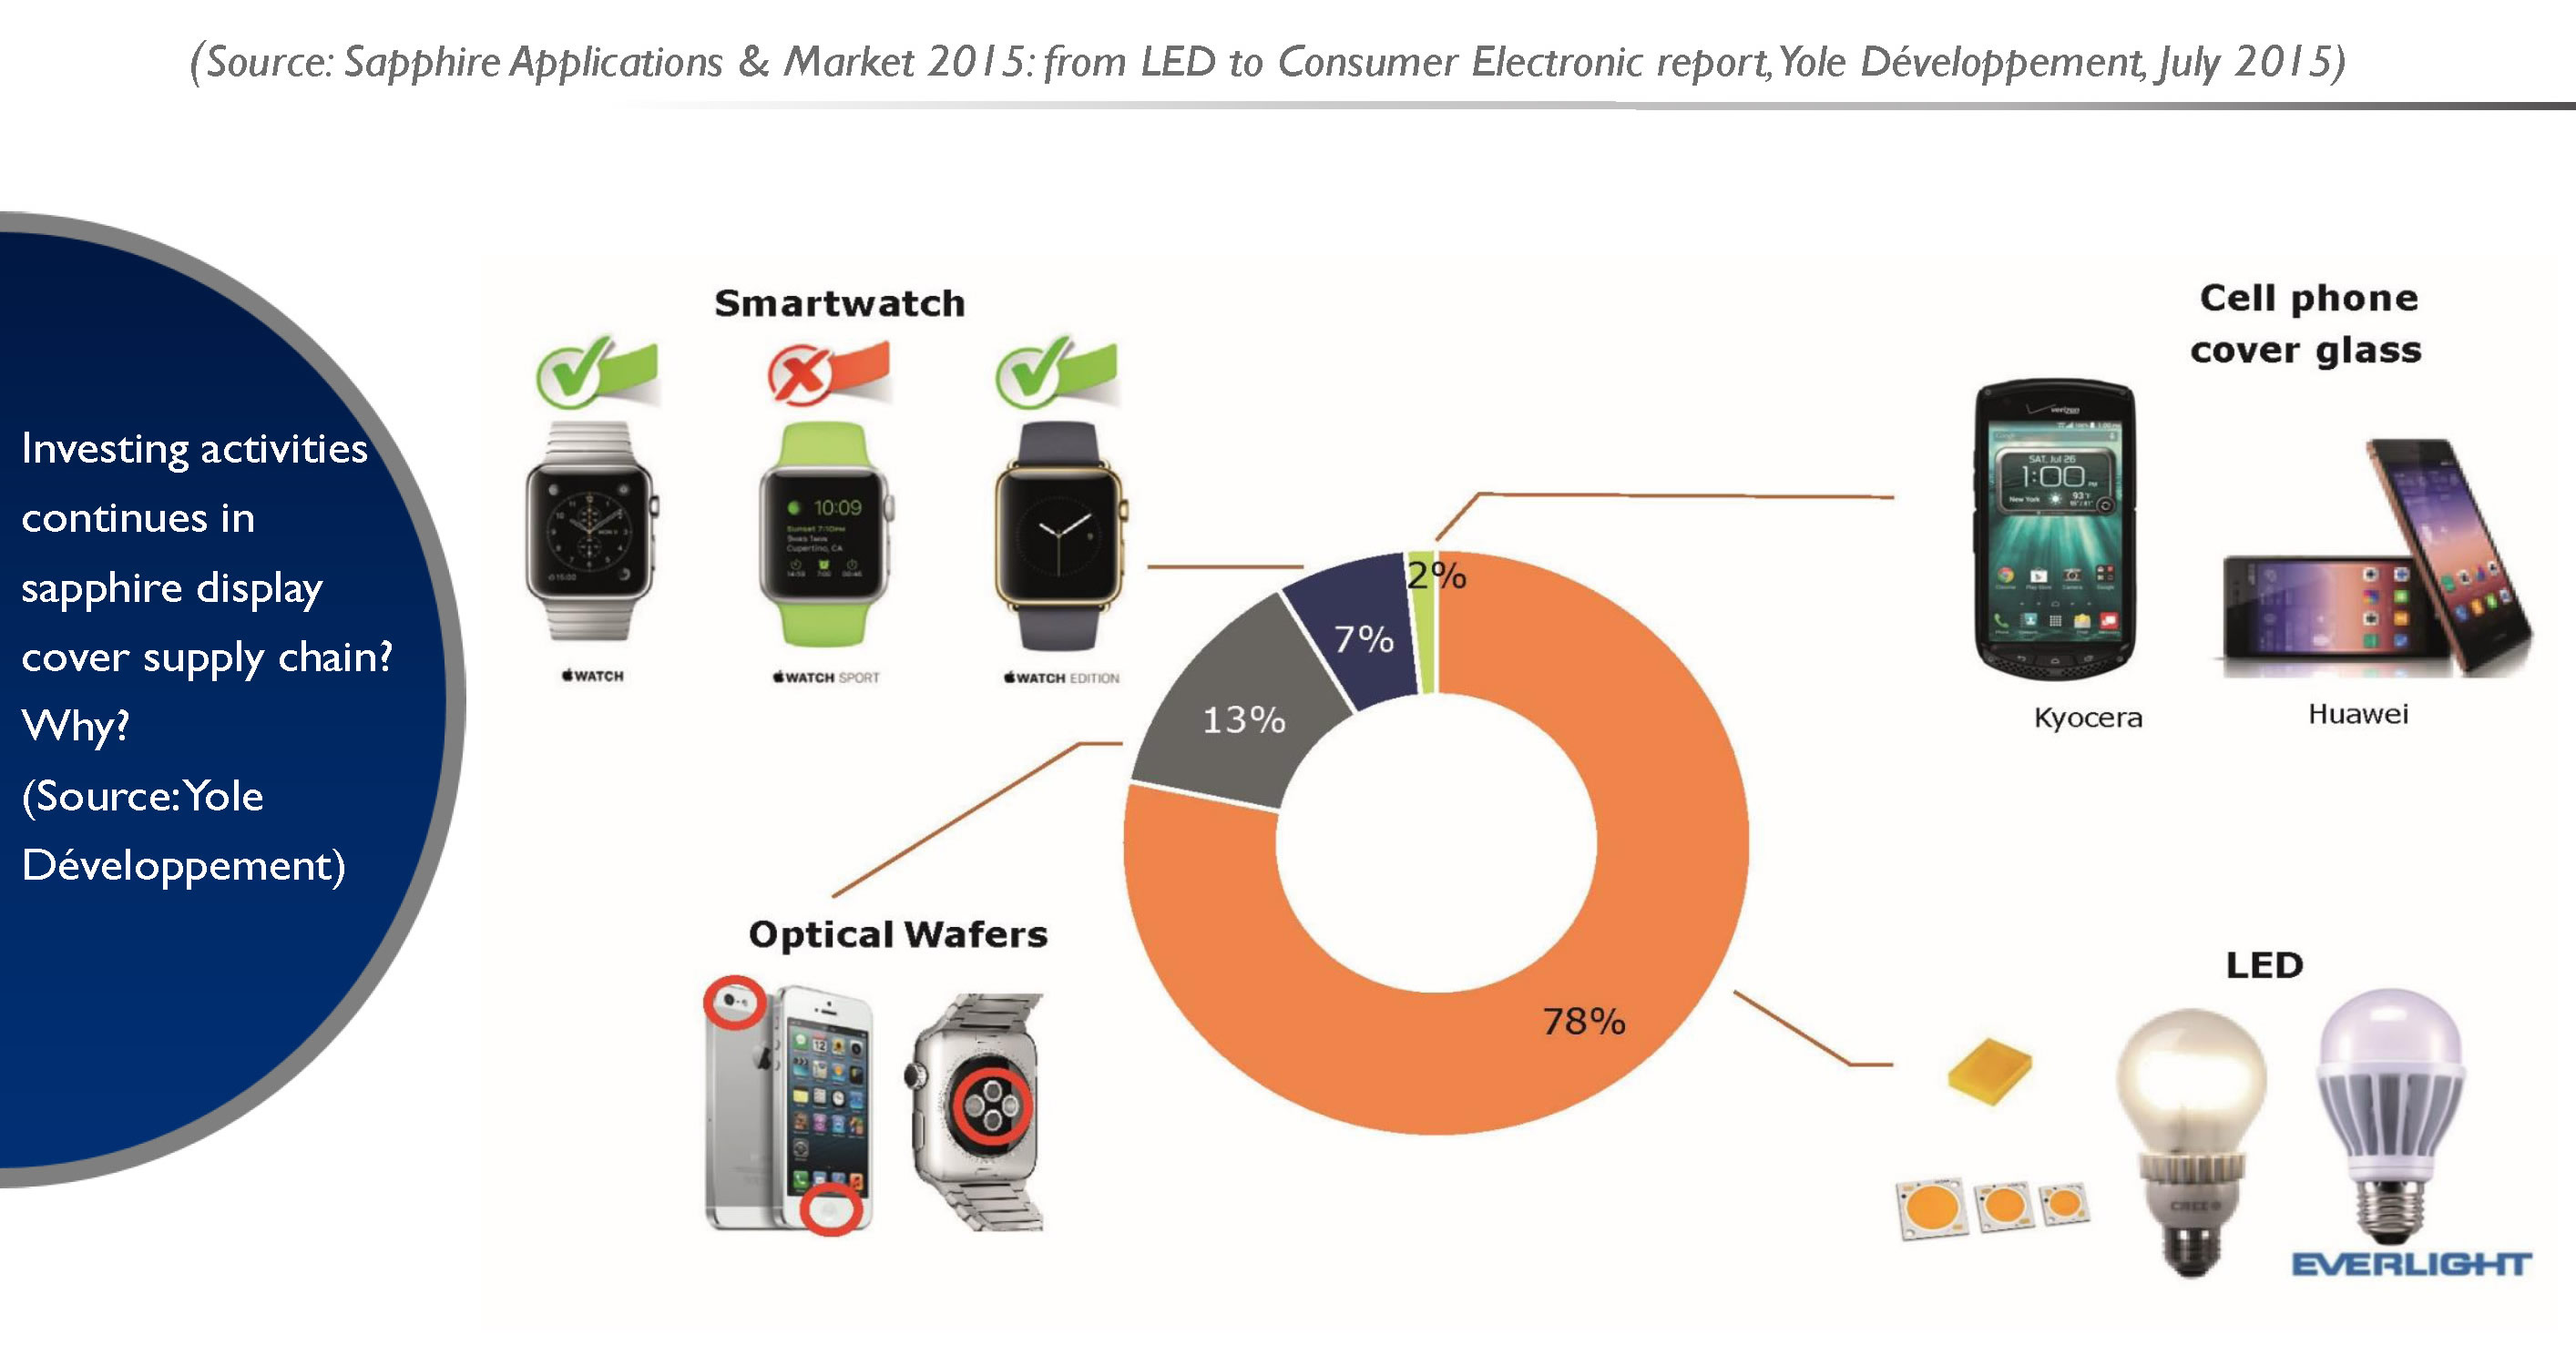 2015 material consumption breakdown per application